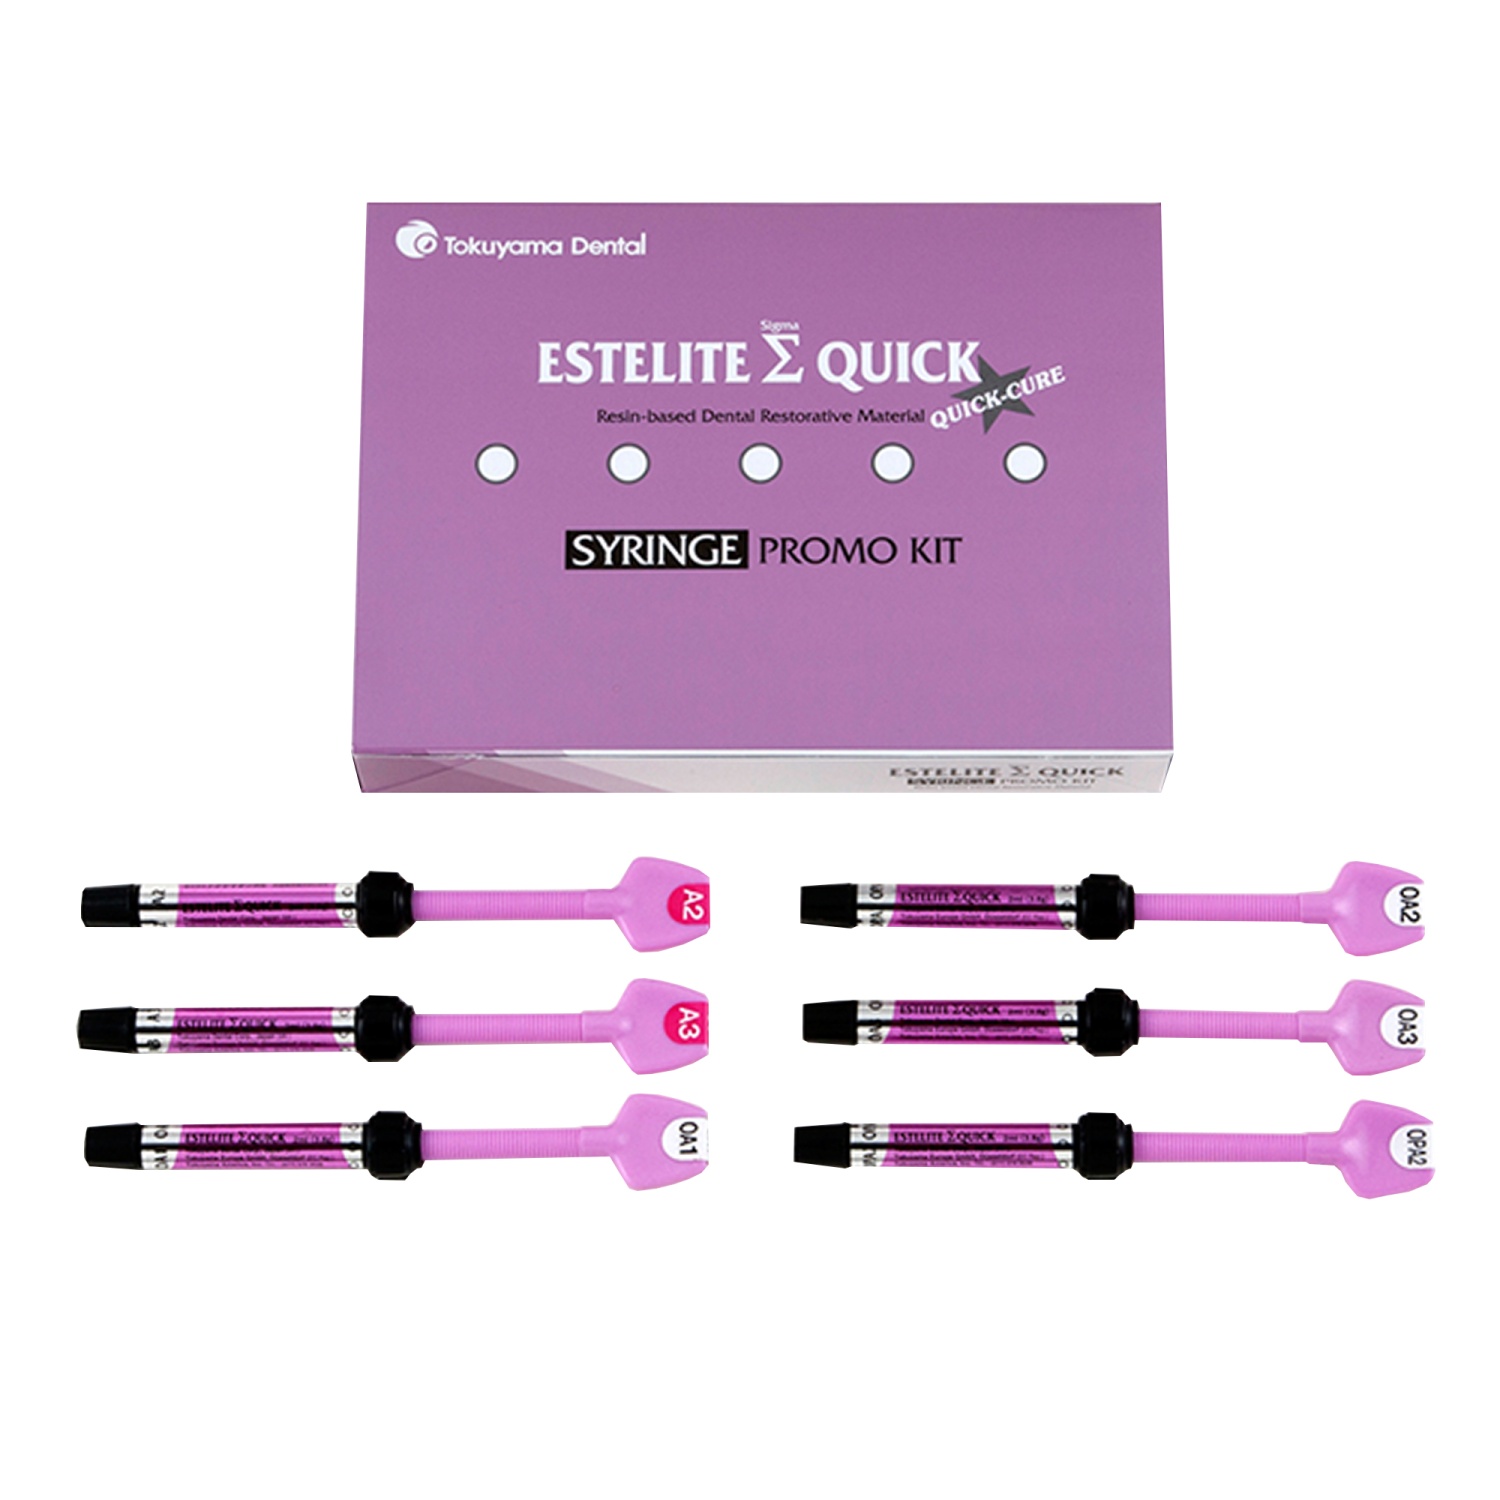 Эстелайт набор Estelite Sigma Quick Syringe Promo kit 6 шприц. арт.13096